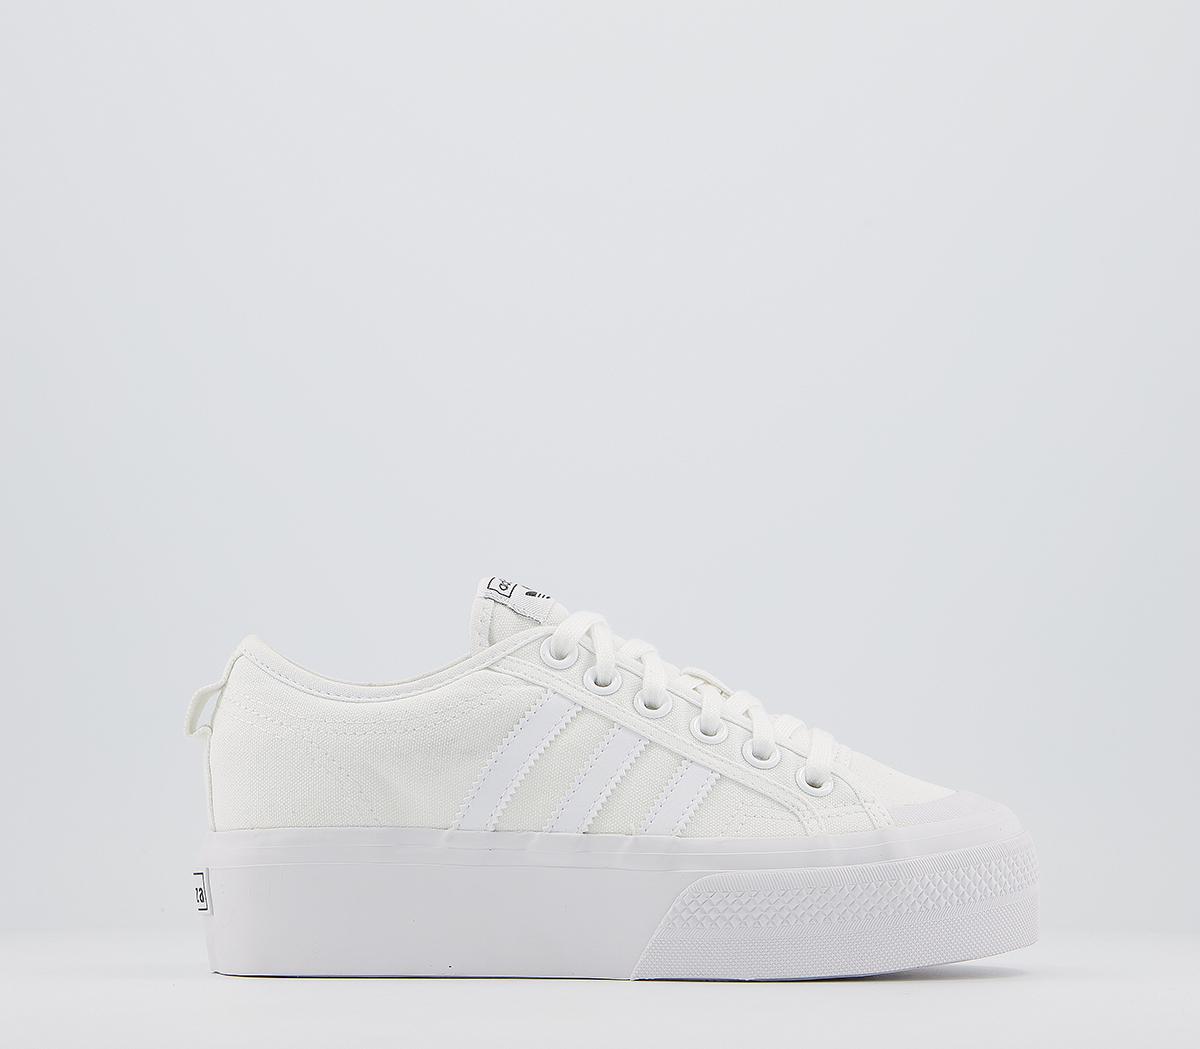 adidas white platform sneakers